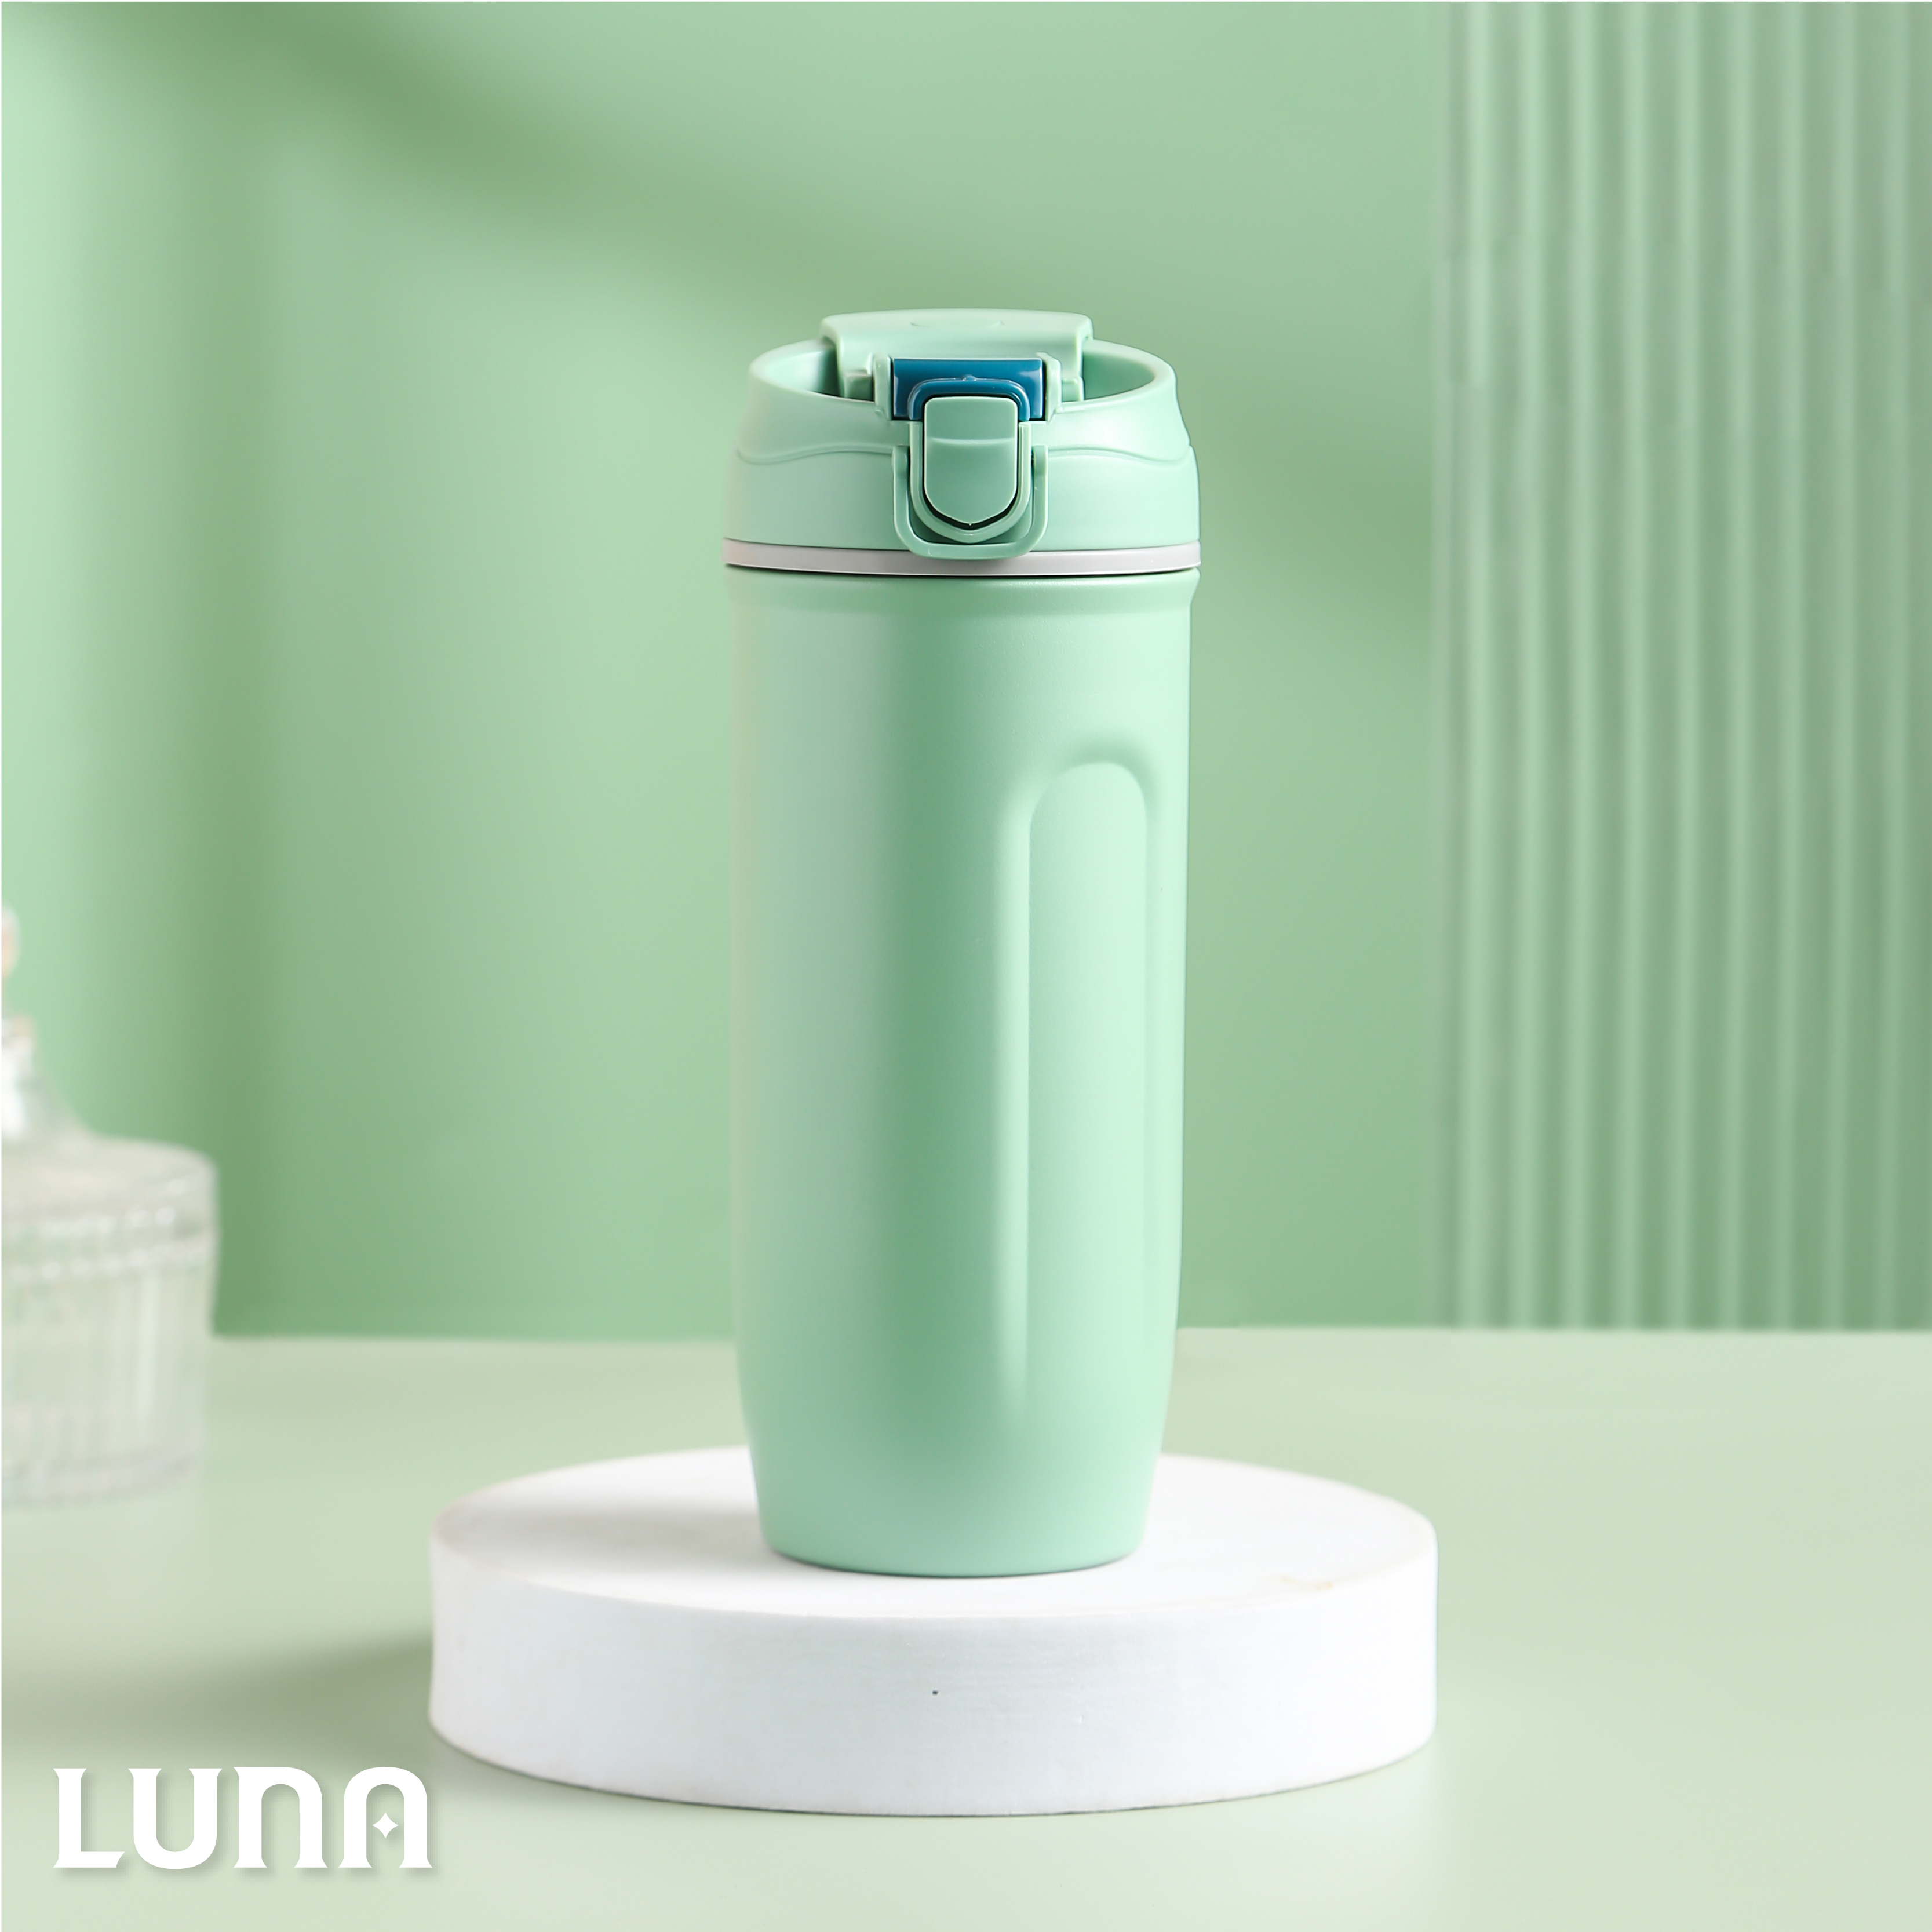 Luna Flask 520ml Single